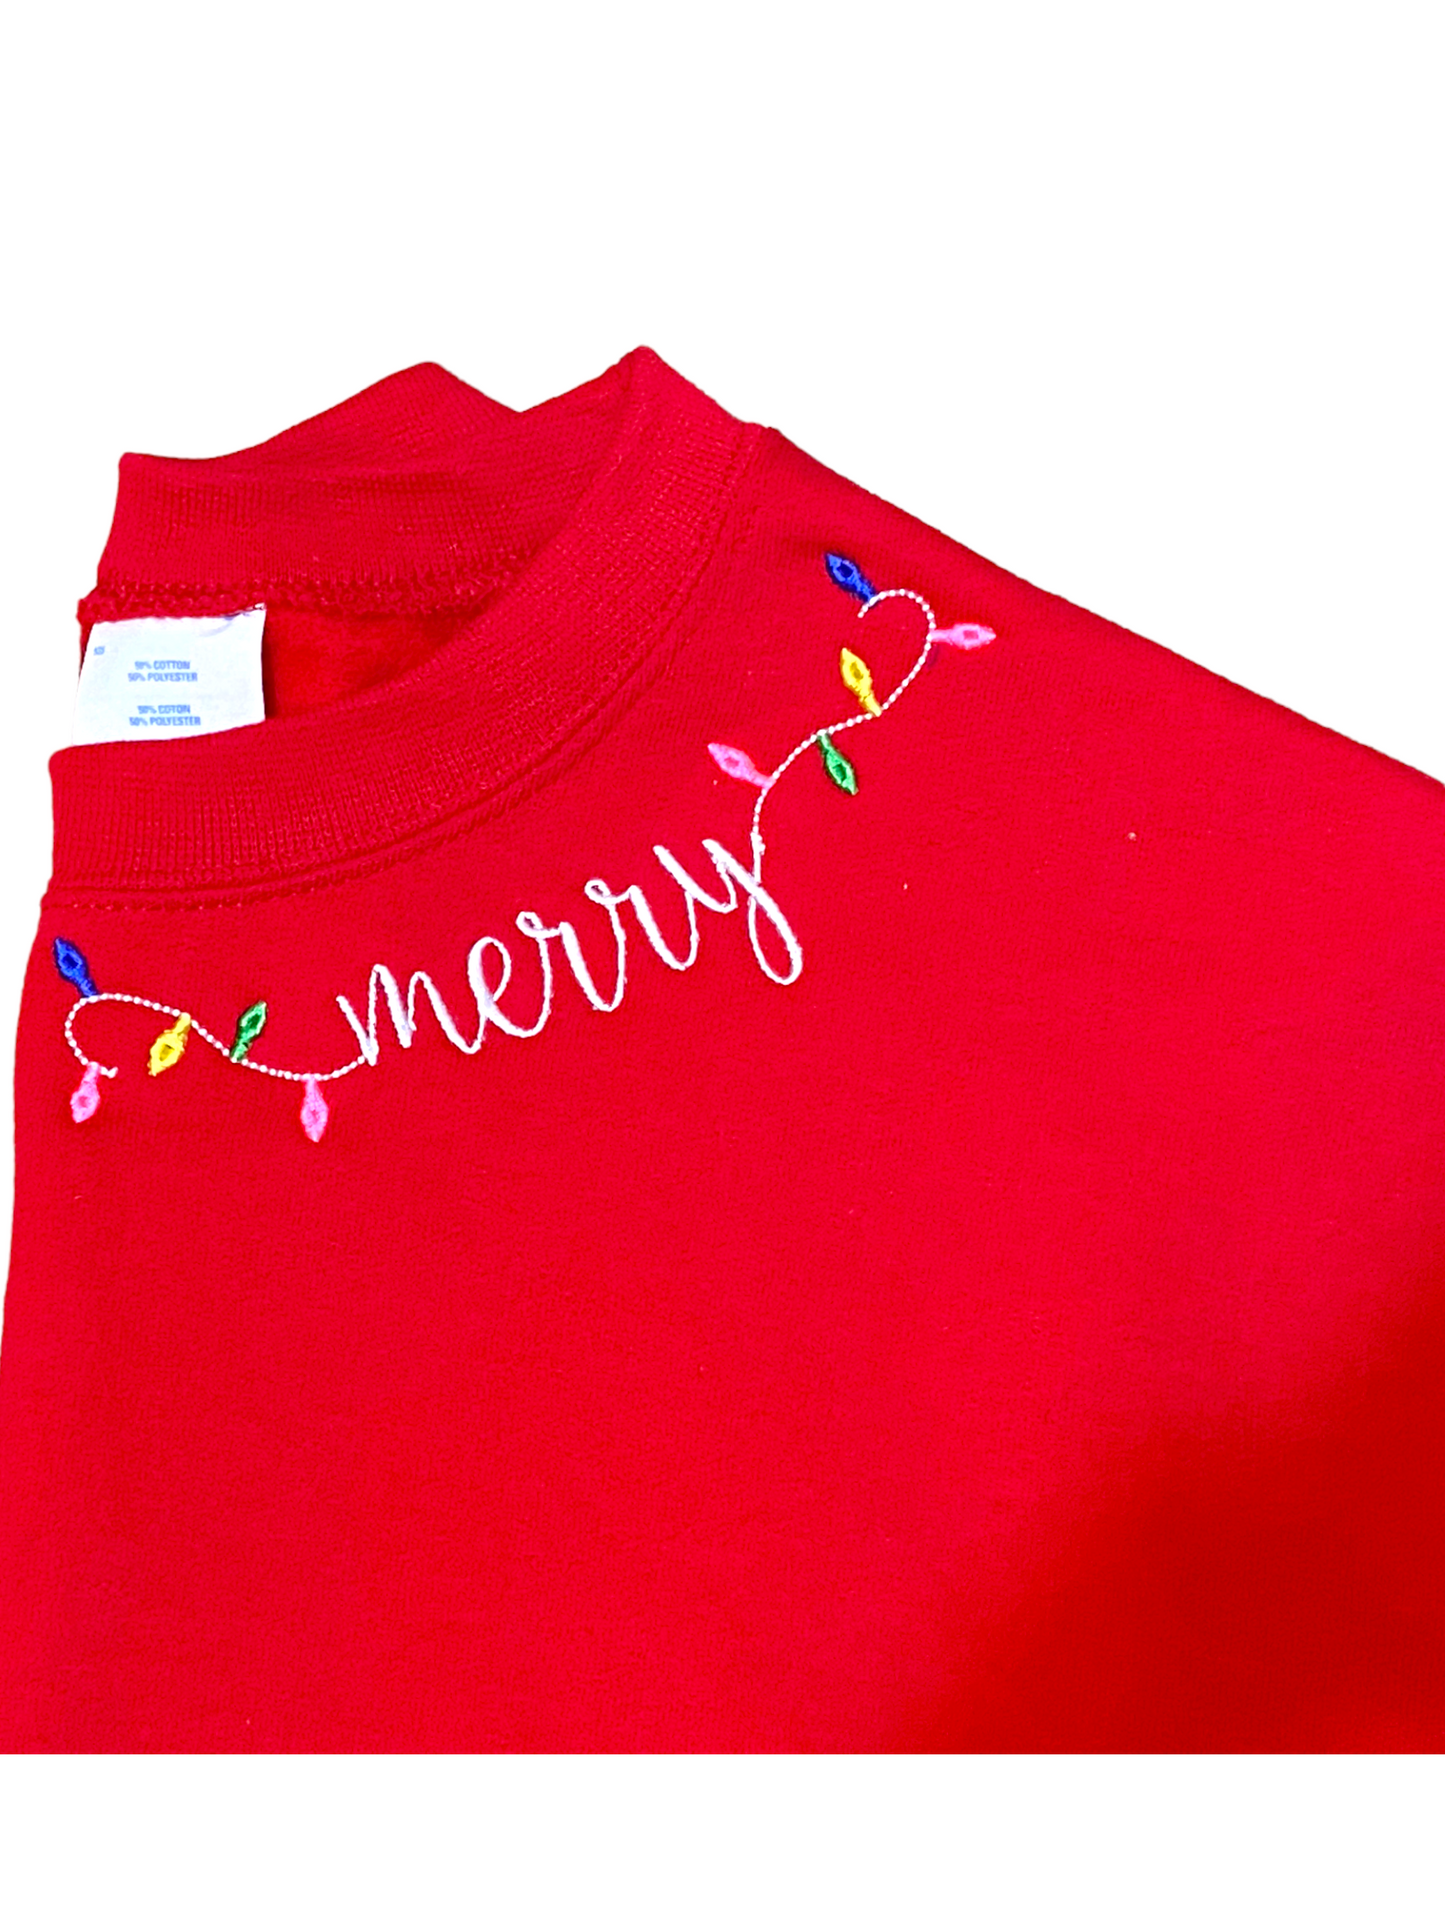 Merry and Lights Sweatshirt